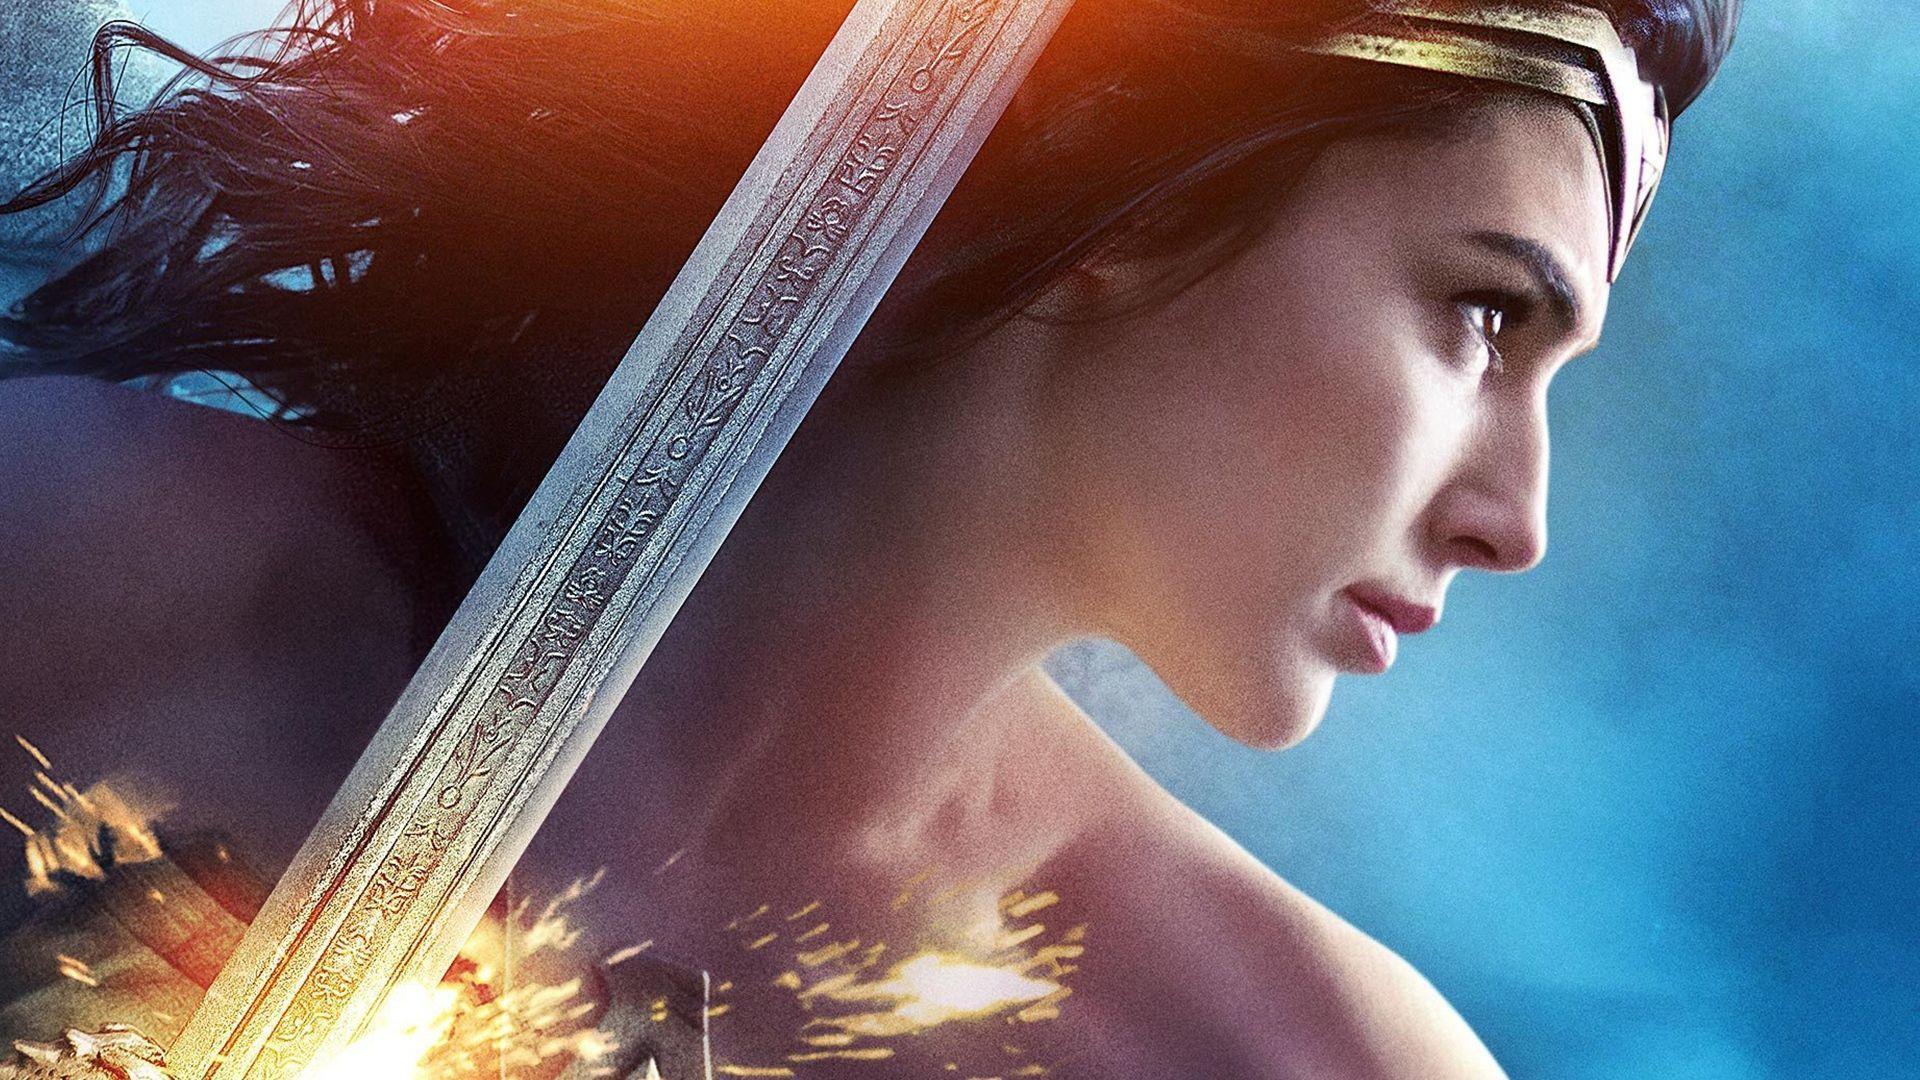 Wonder Woman (2017). Movie Wallpaper